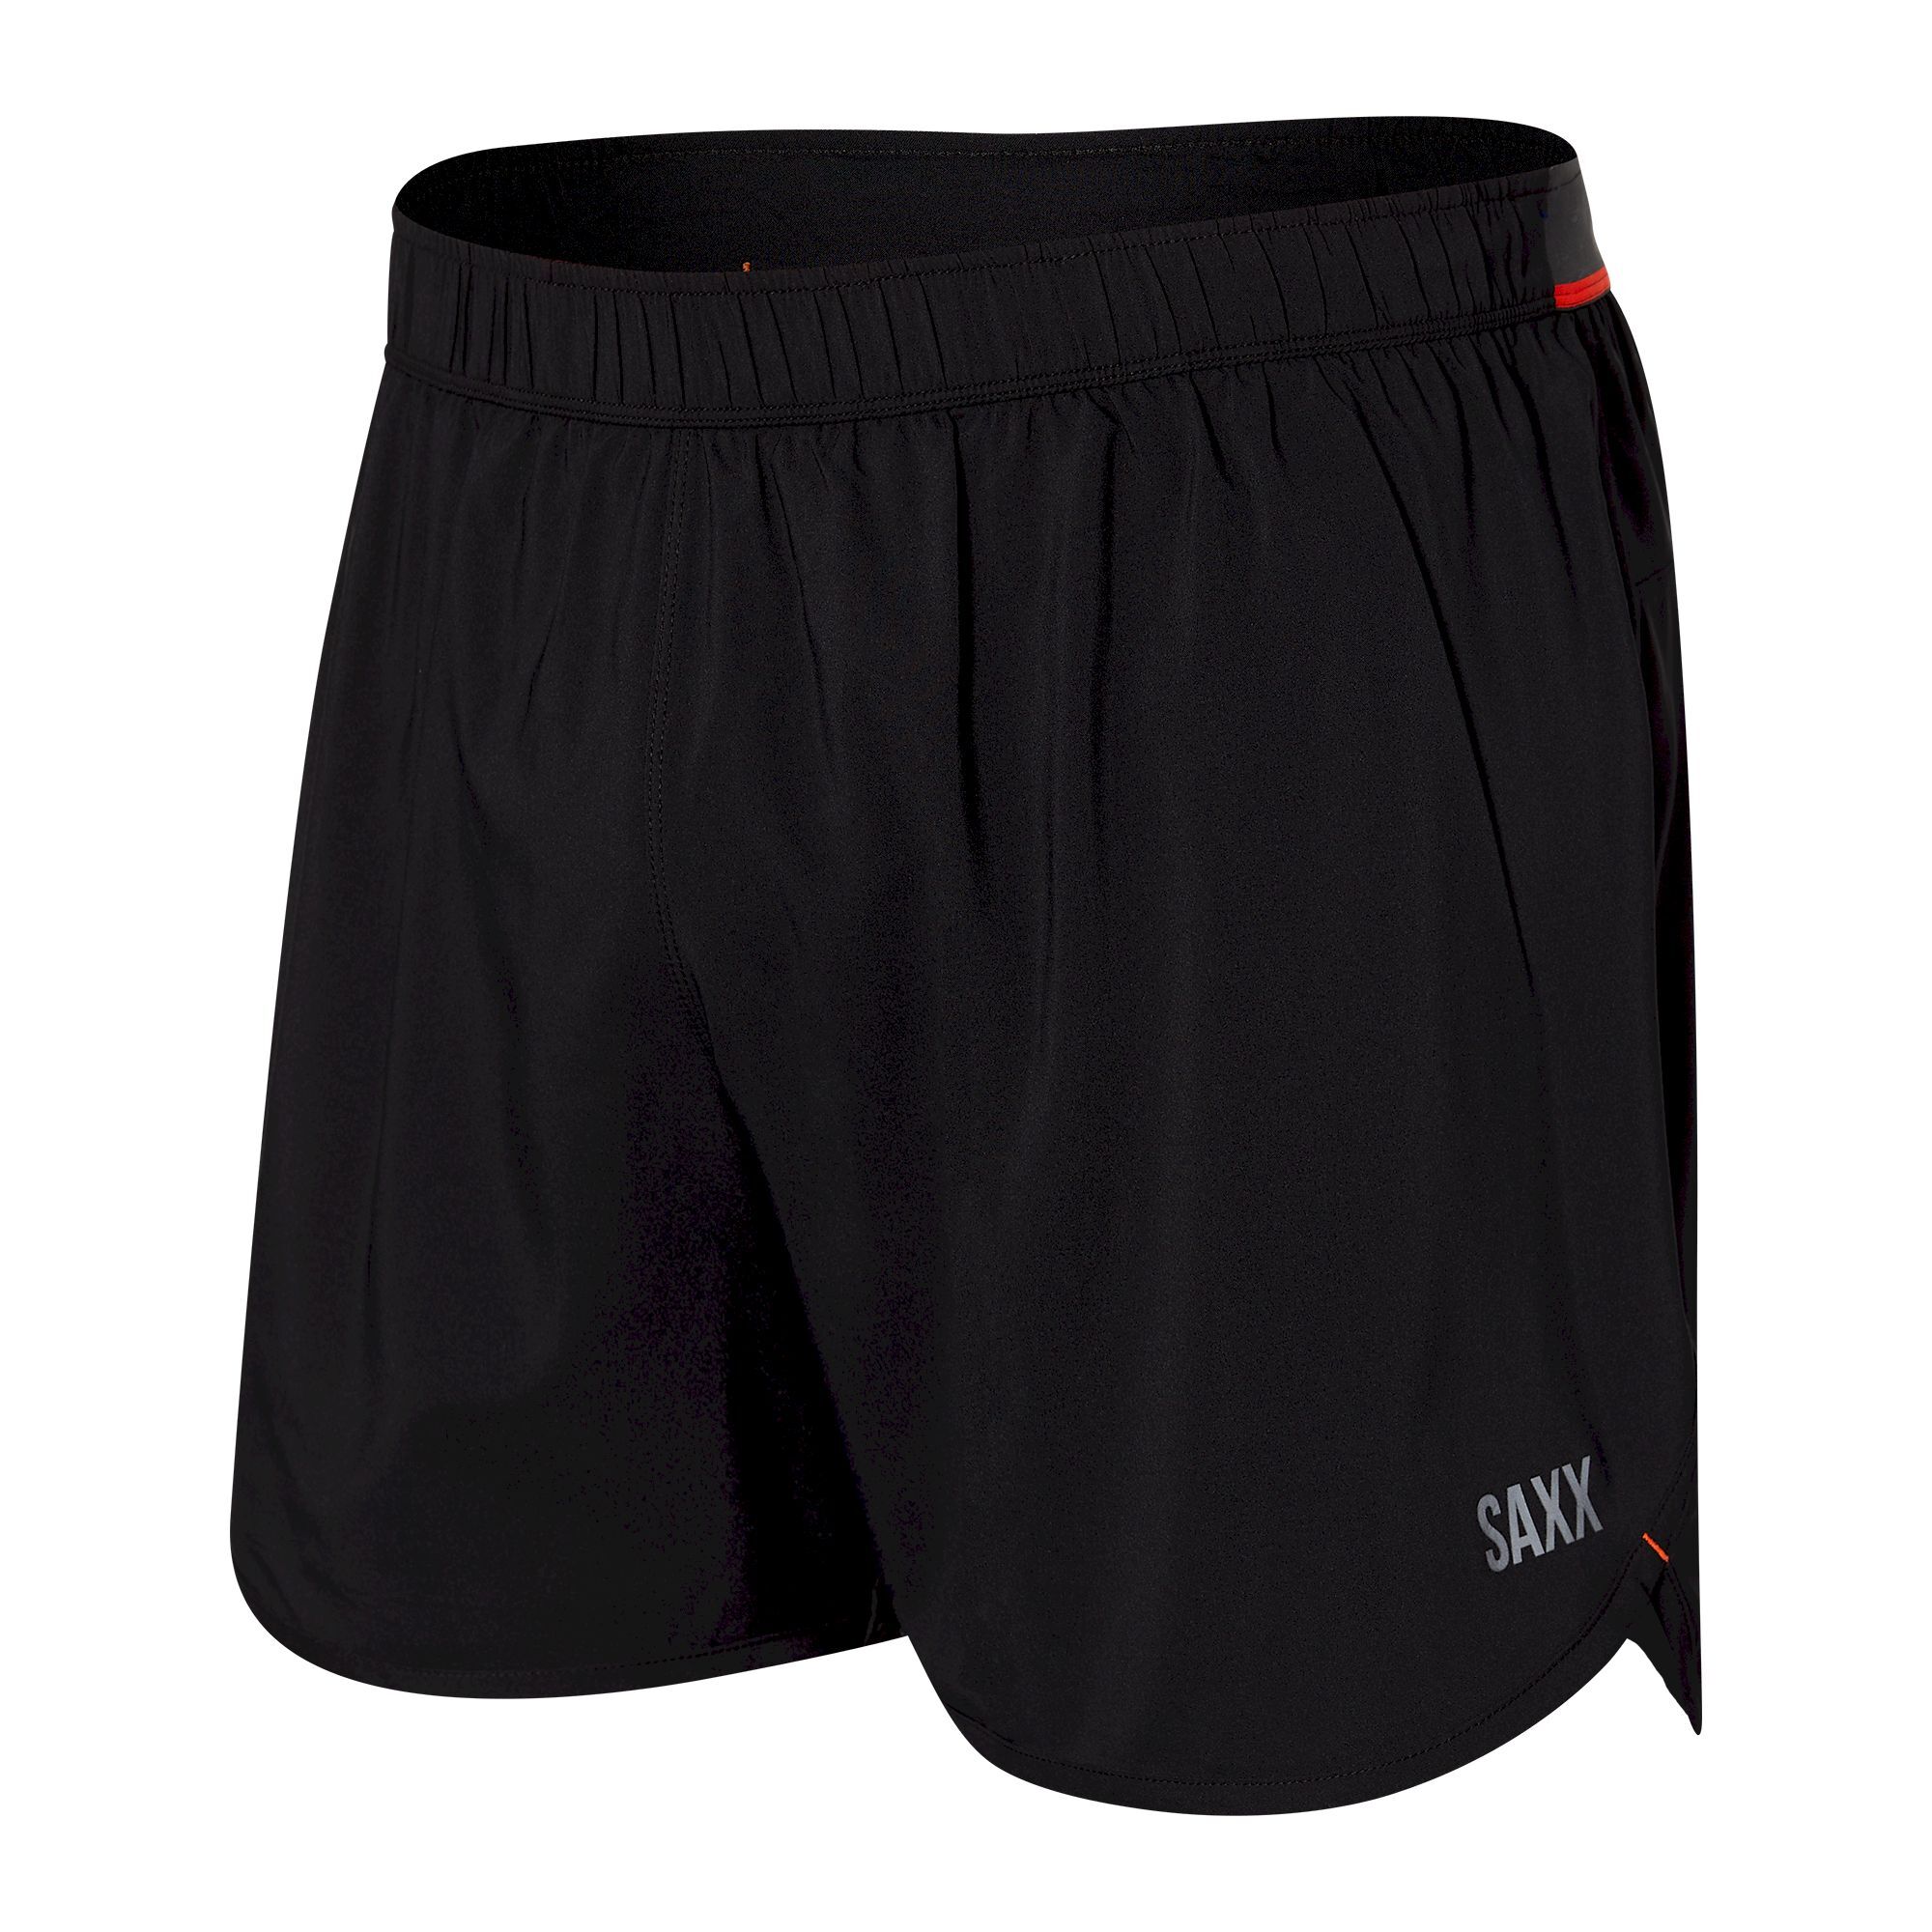 Saxx Hightail 2N1 Run Short 5" - Running shorts - Men's